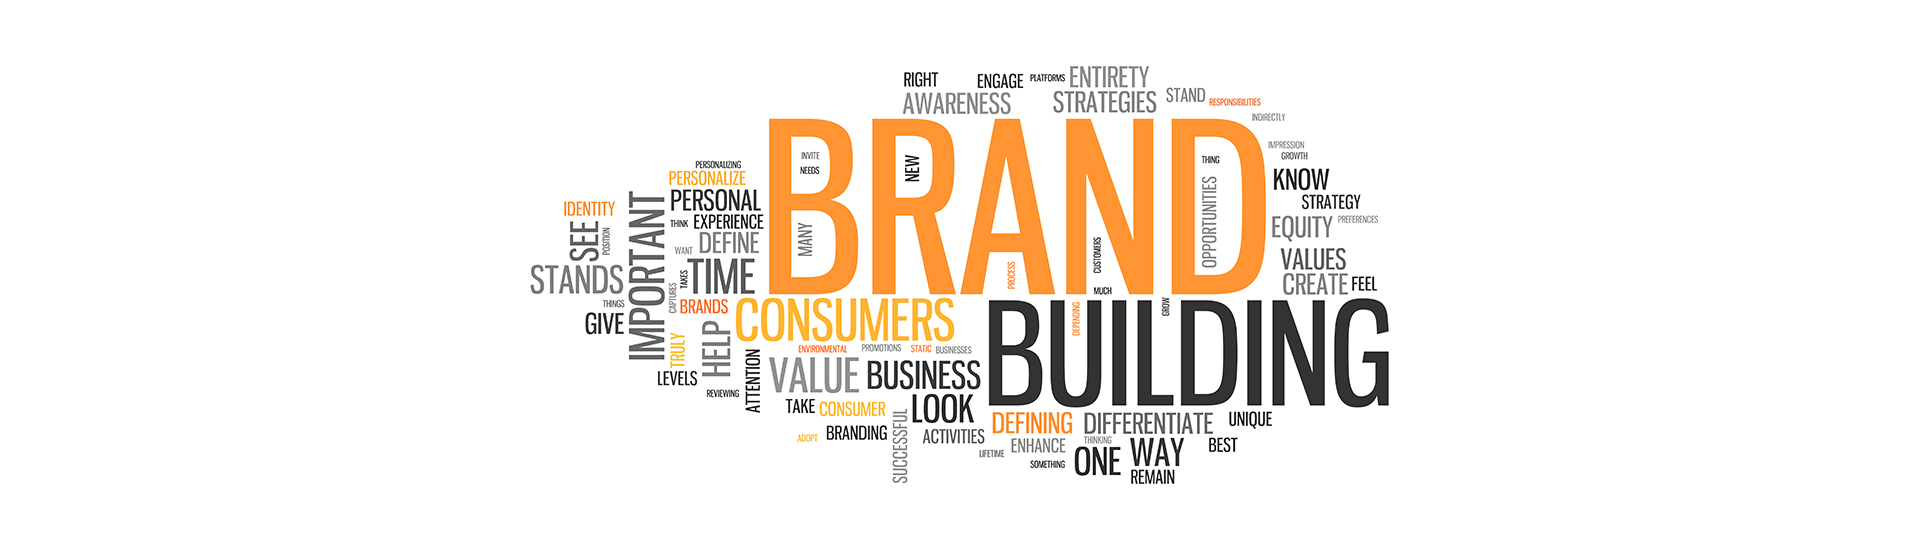 Brand Marketing Course